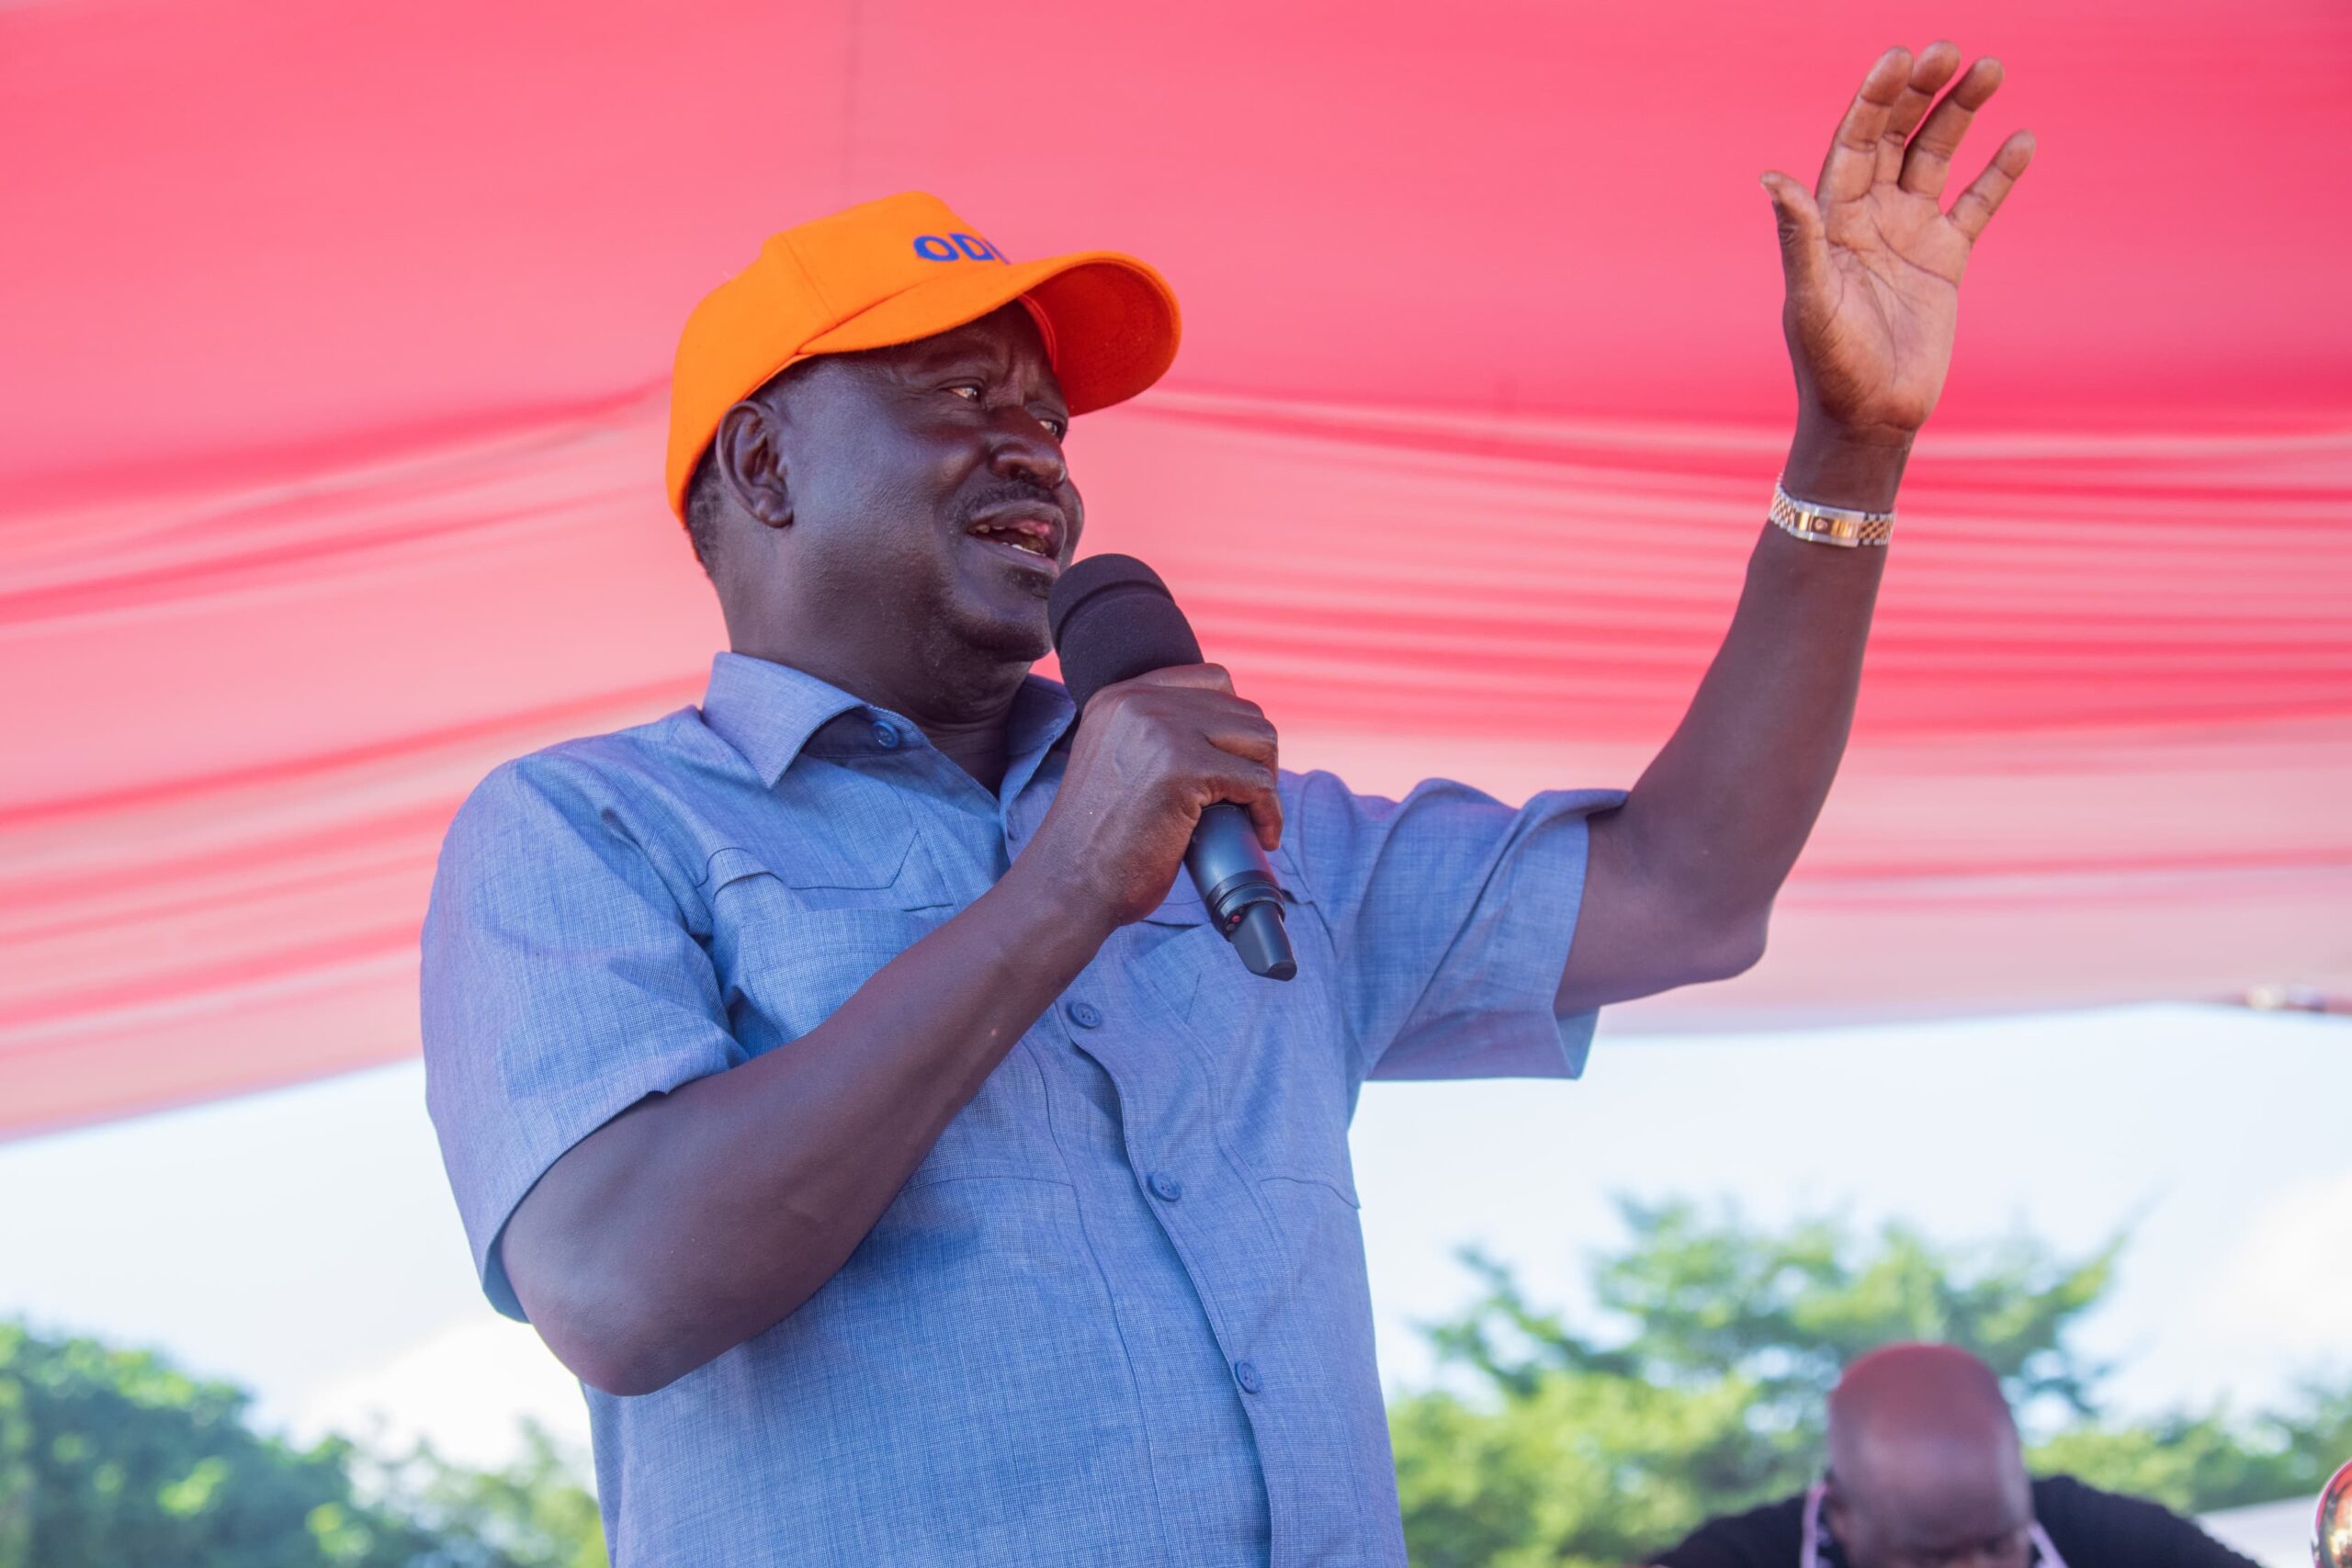 ODM leader Raila Odinga had attacked Wetangula